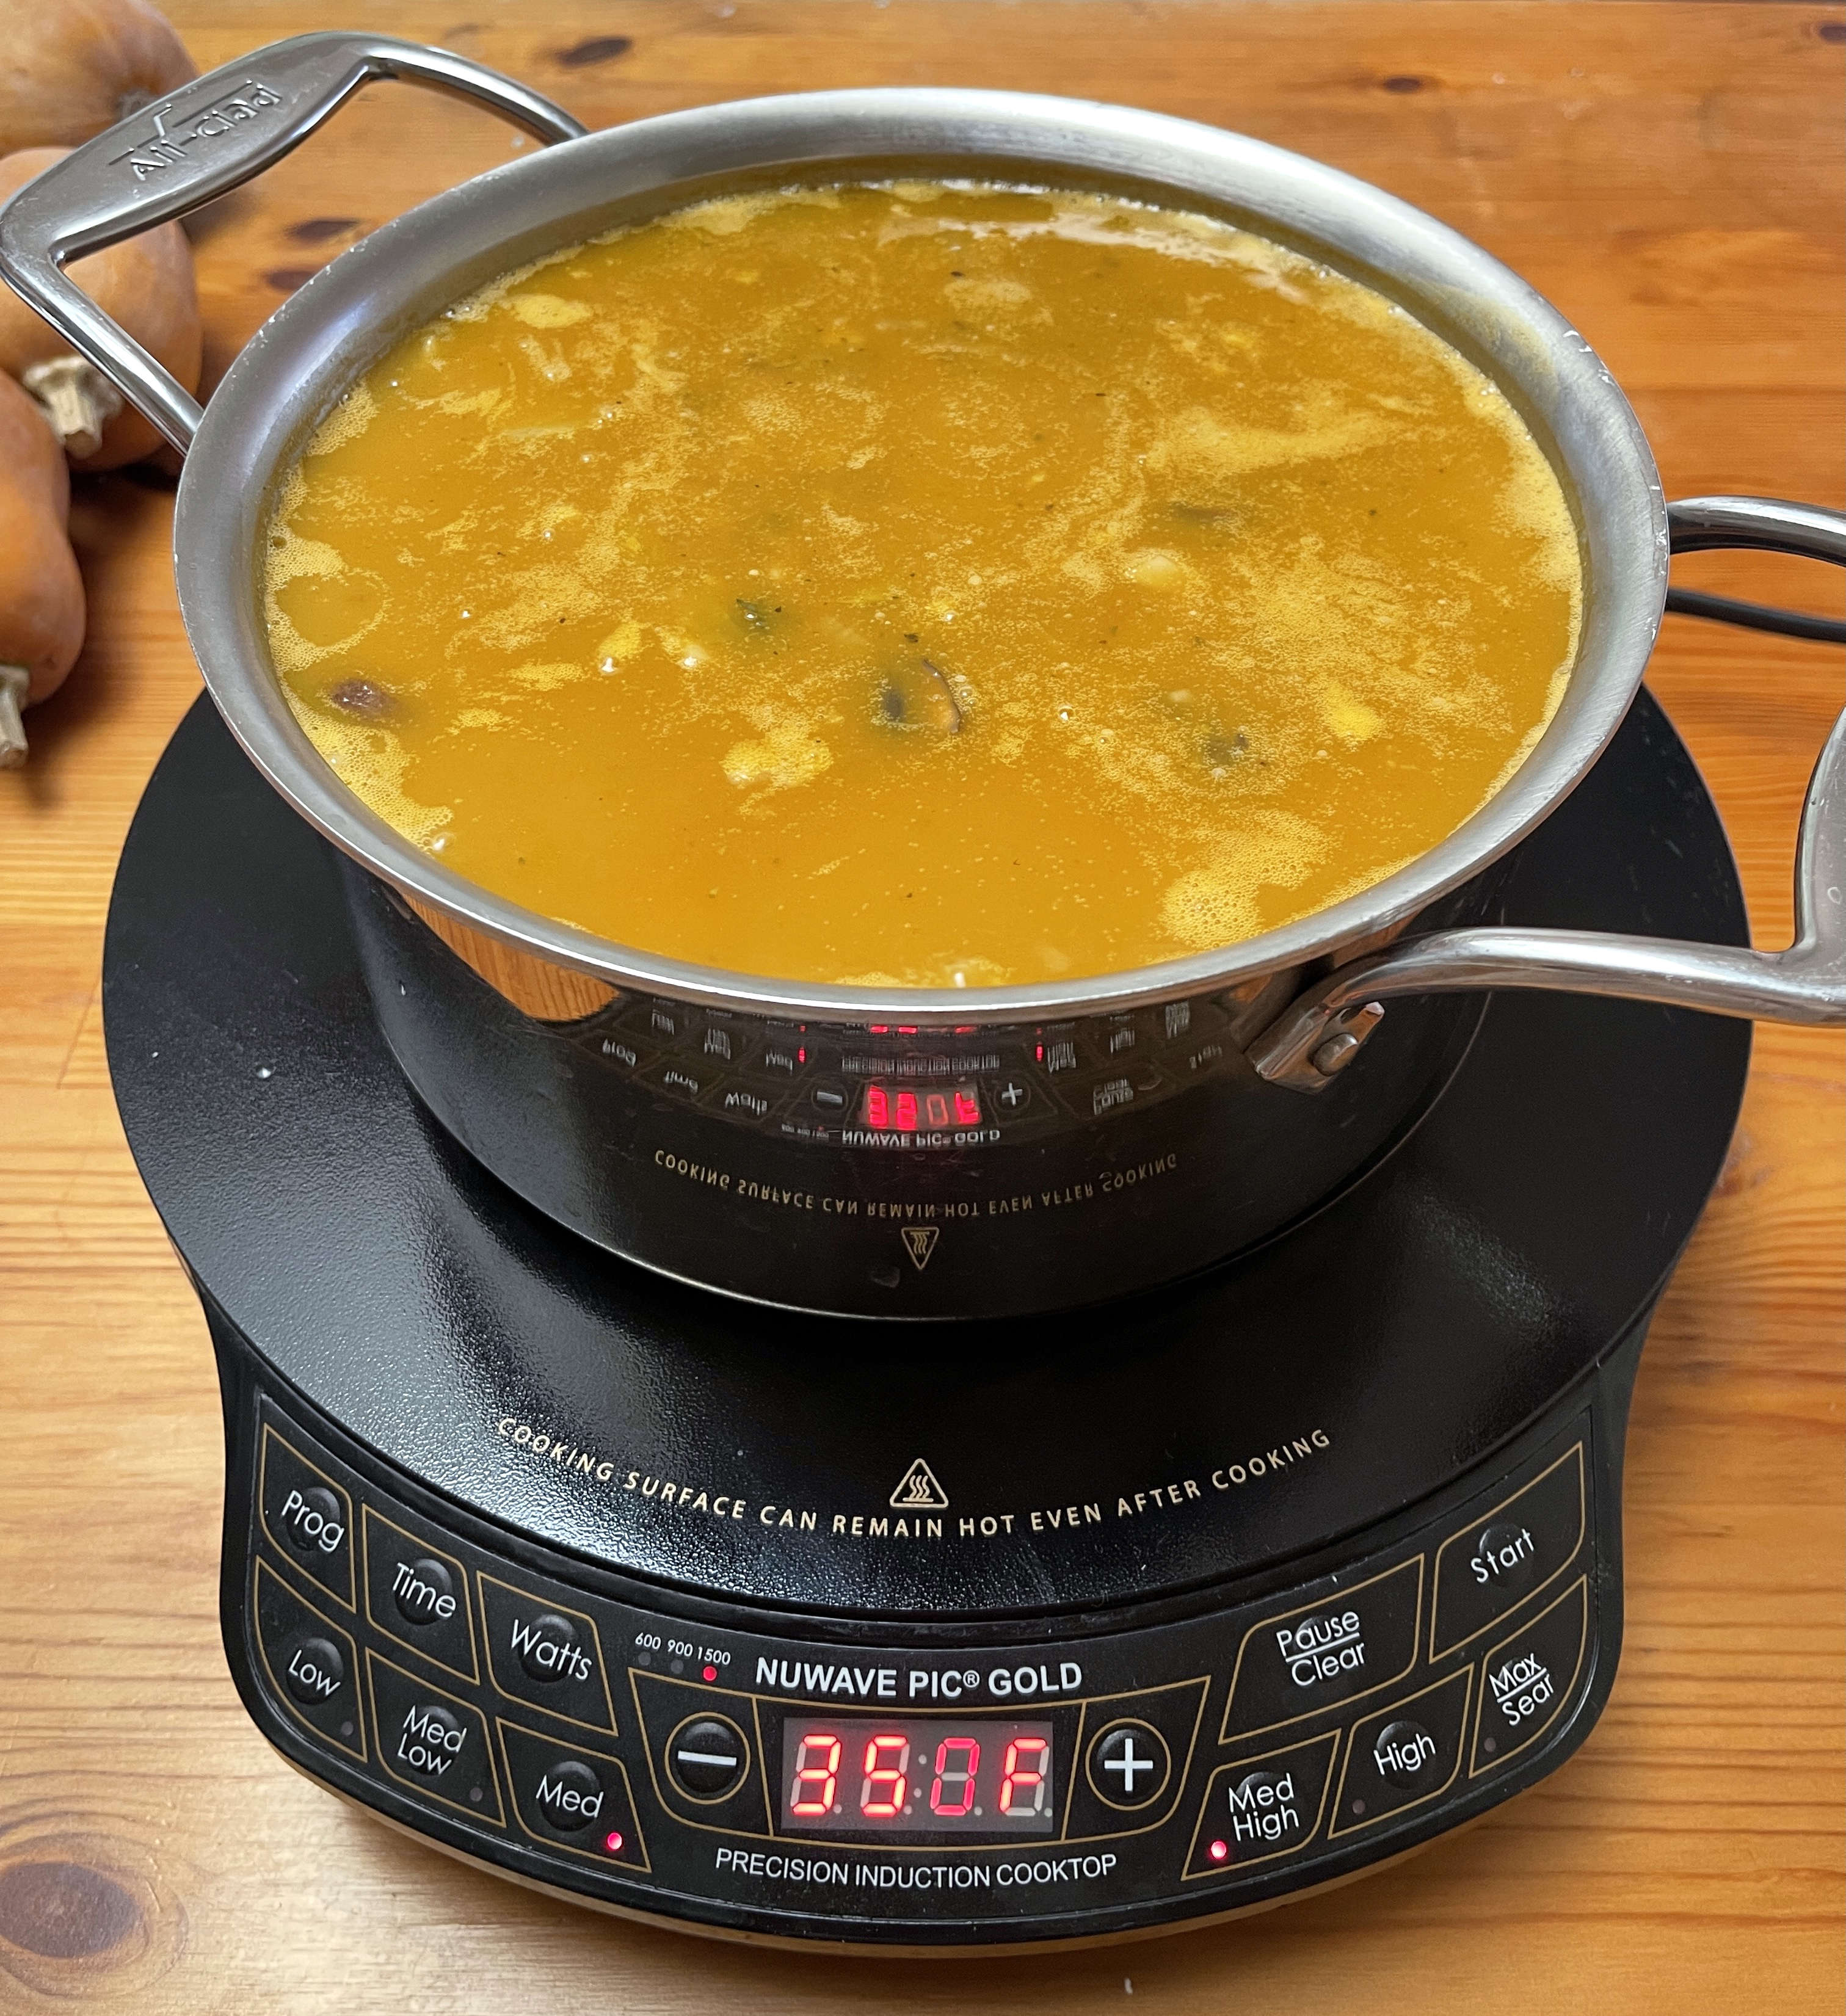 https://zerowastechef.com/wp-content/uploads/2022/01/01.21-induction-cooker-shop-the-fridge-soup-stainless-stee..jpg